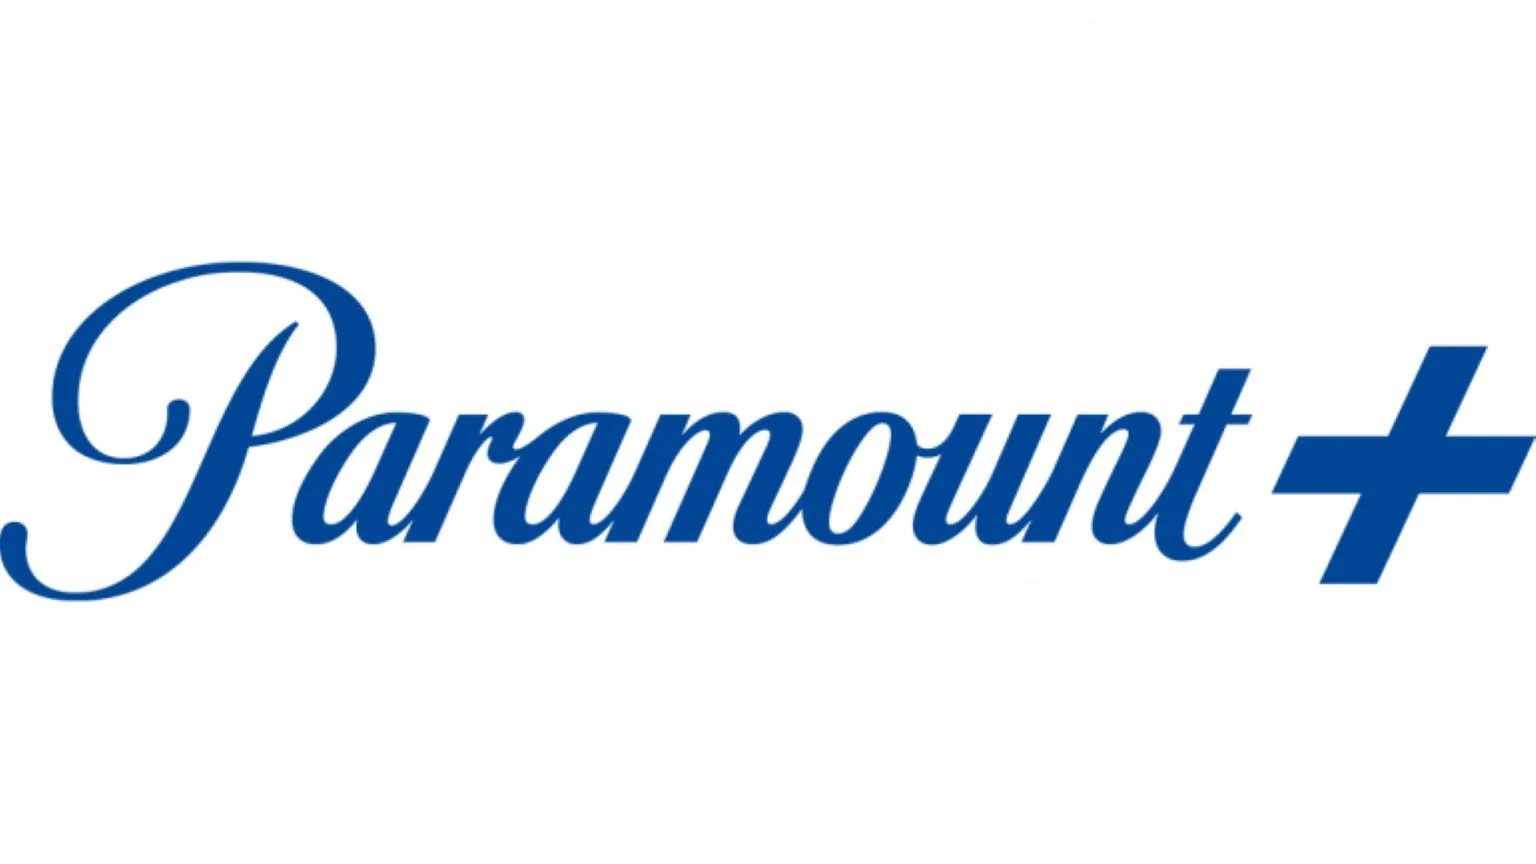 Paramount+